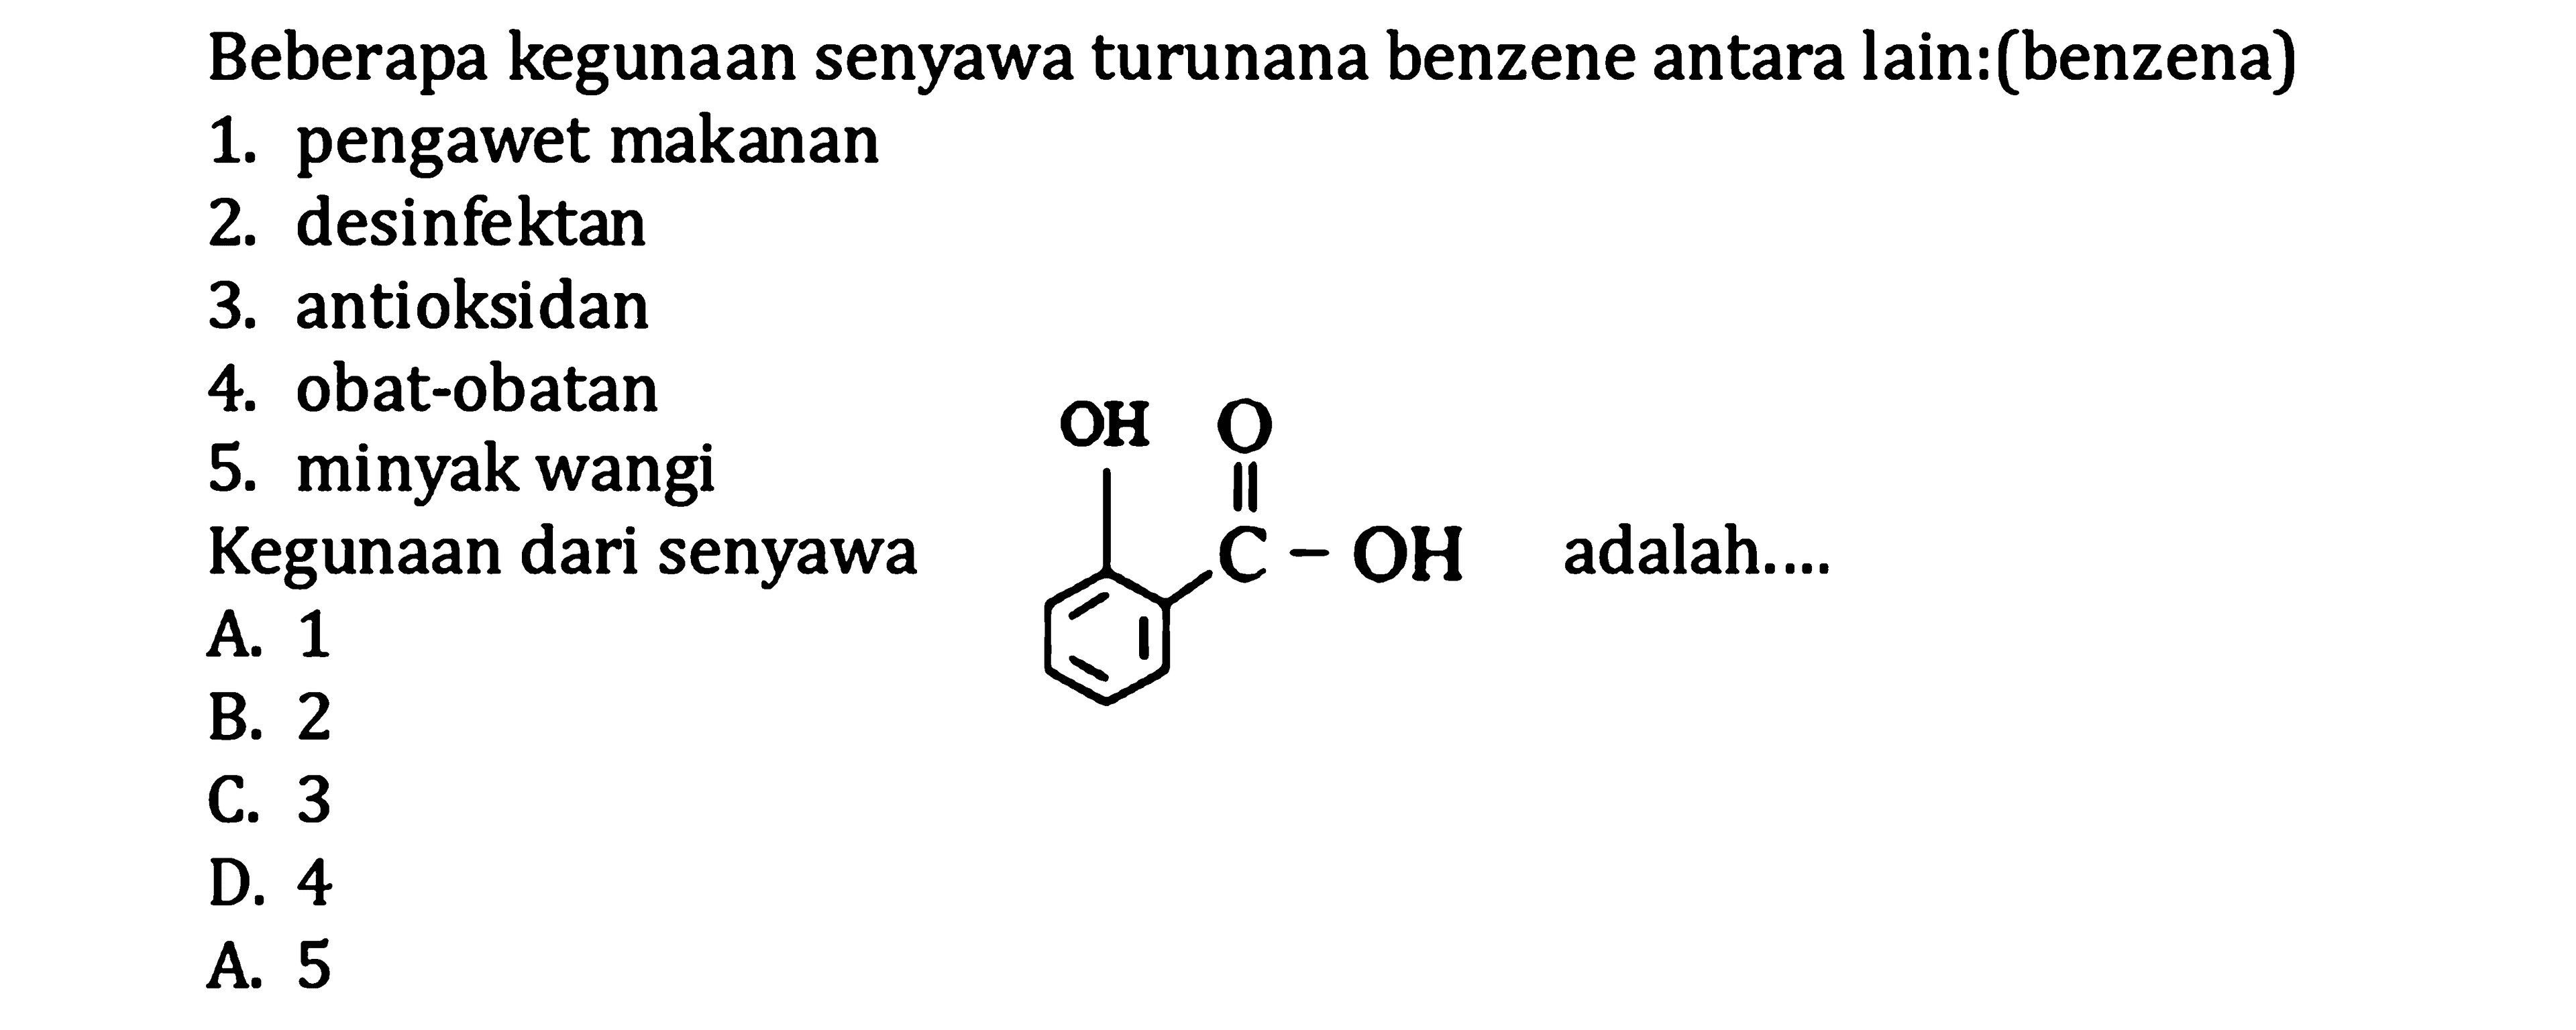 Beberapa kegunaan senyawa turunana benzene antara lain:(benzena)
1. pengawet makanan
2. desinfektan
3. antioksidan
4. obat-obatan
5. minyak wangi Kegunaan dari senyawa
A. 1
B. 2 adalah....
B. 3
D. 4
A. 5